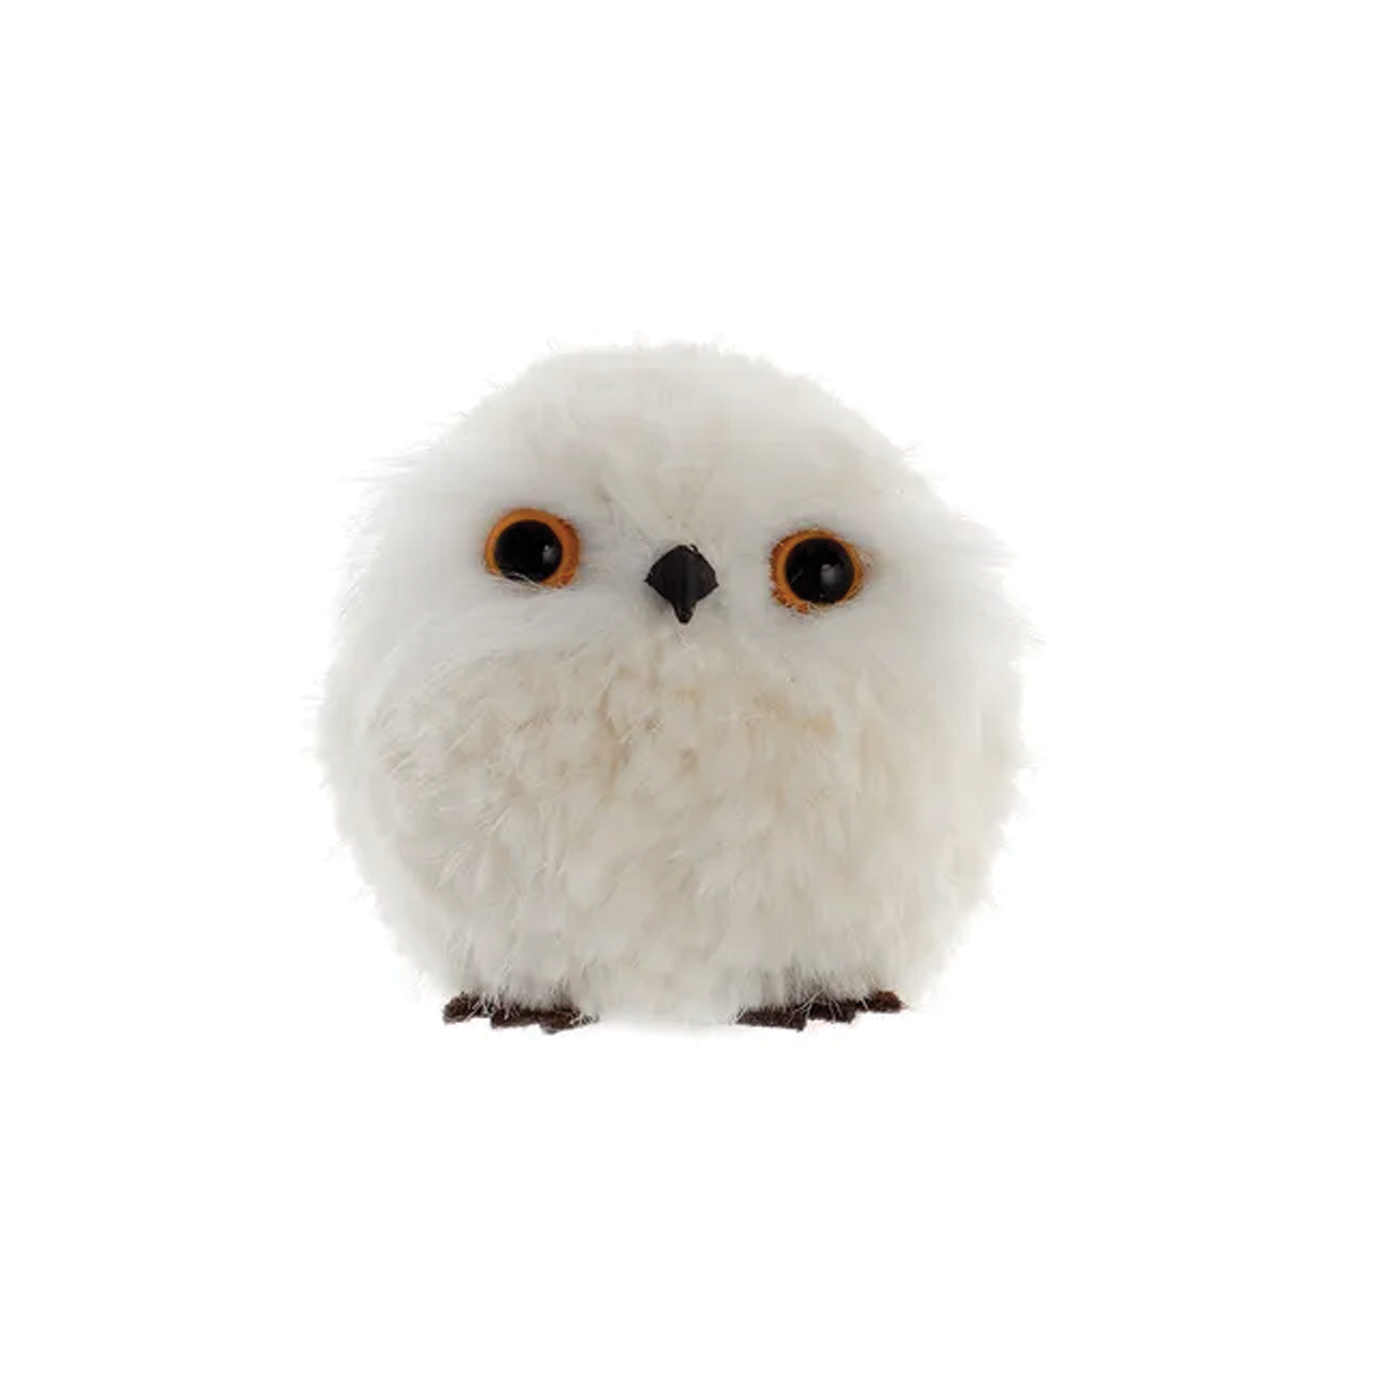 White Fluffy Owl Ornament - Awake